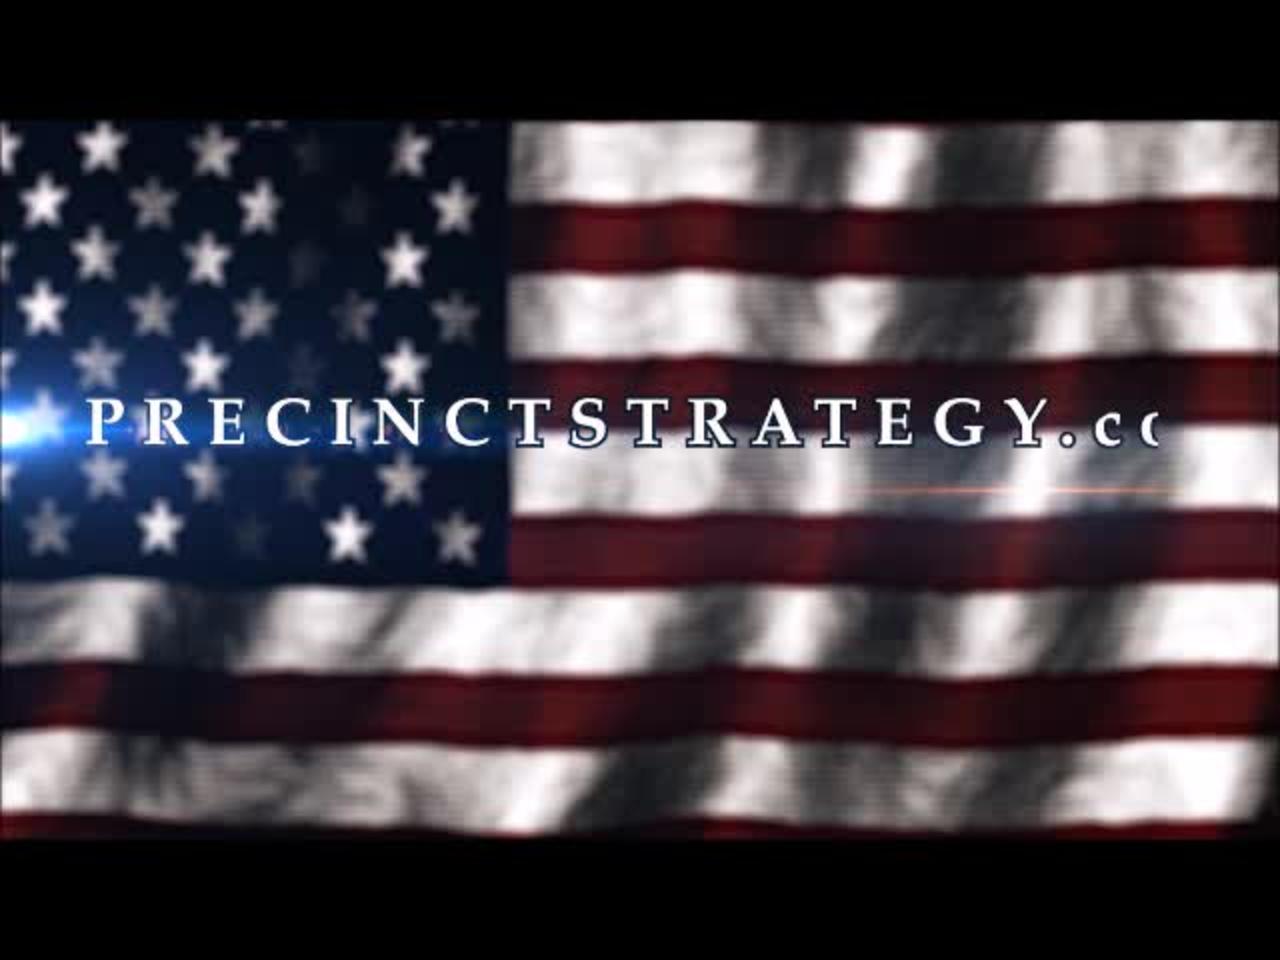 Precinct Strategy & Election Integrity talk by Dan Schultz May 10, 2022